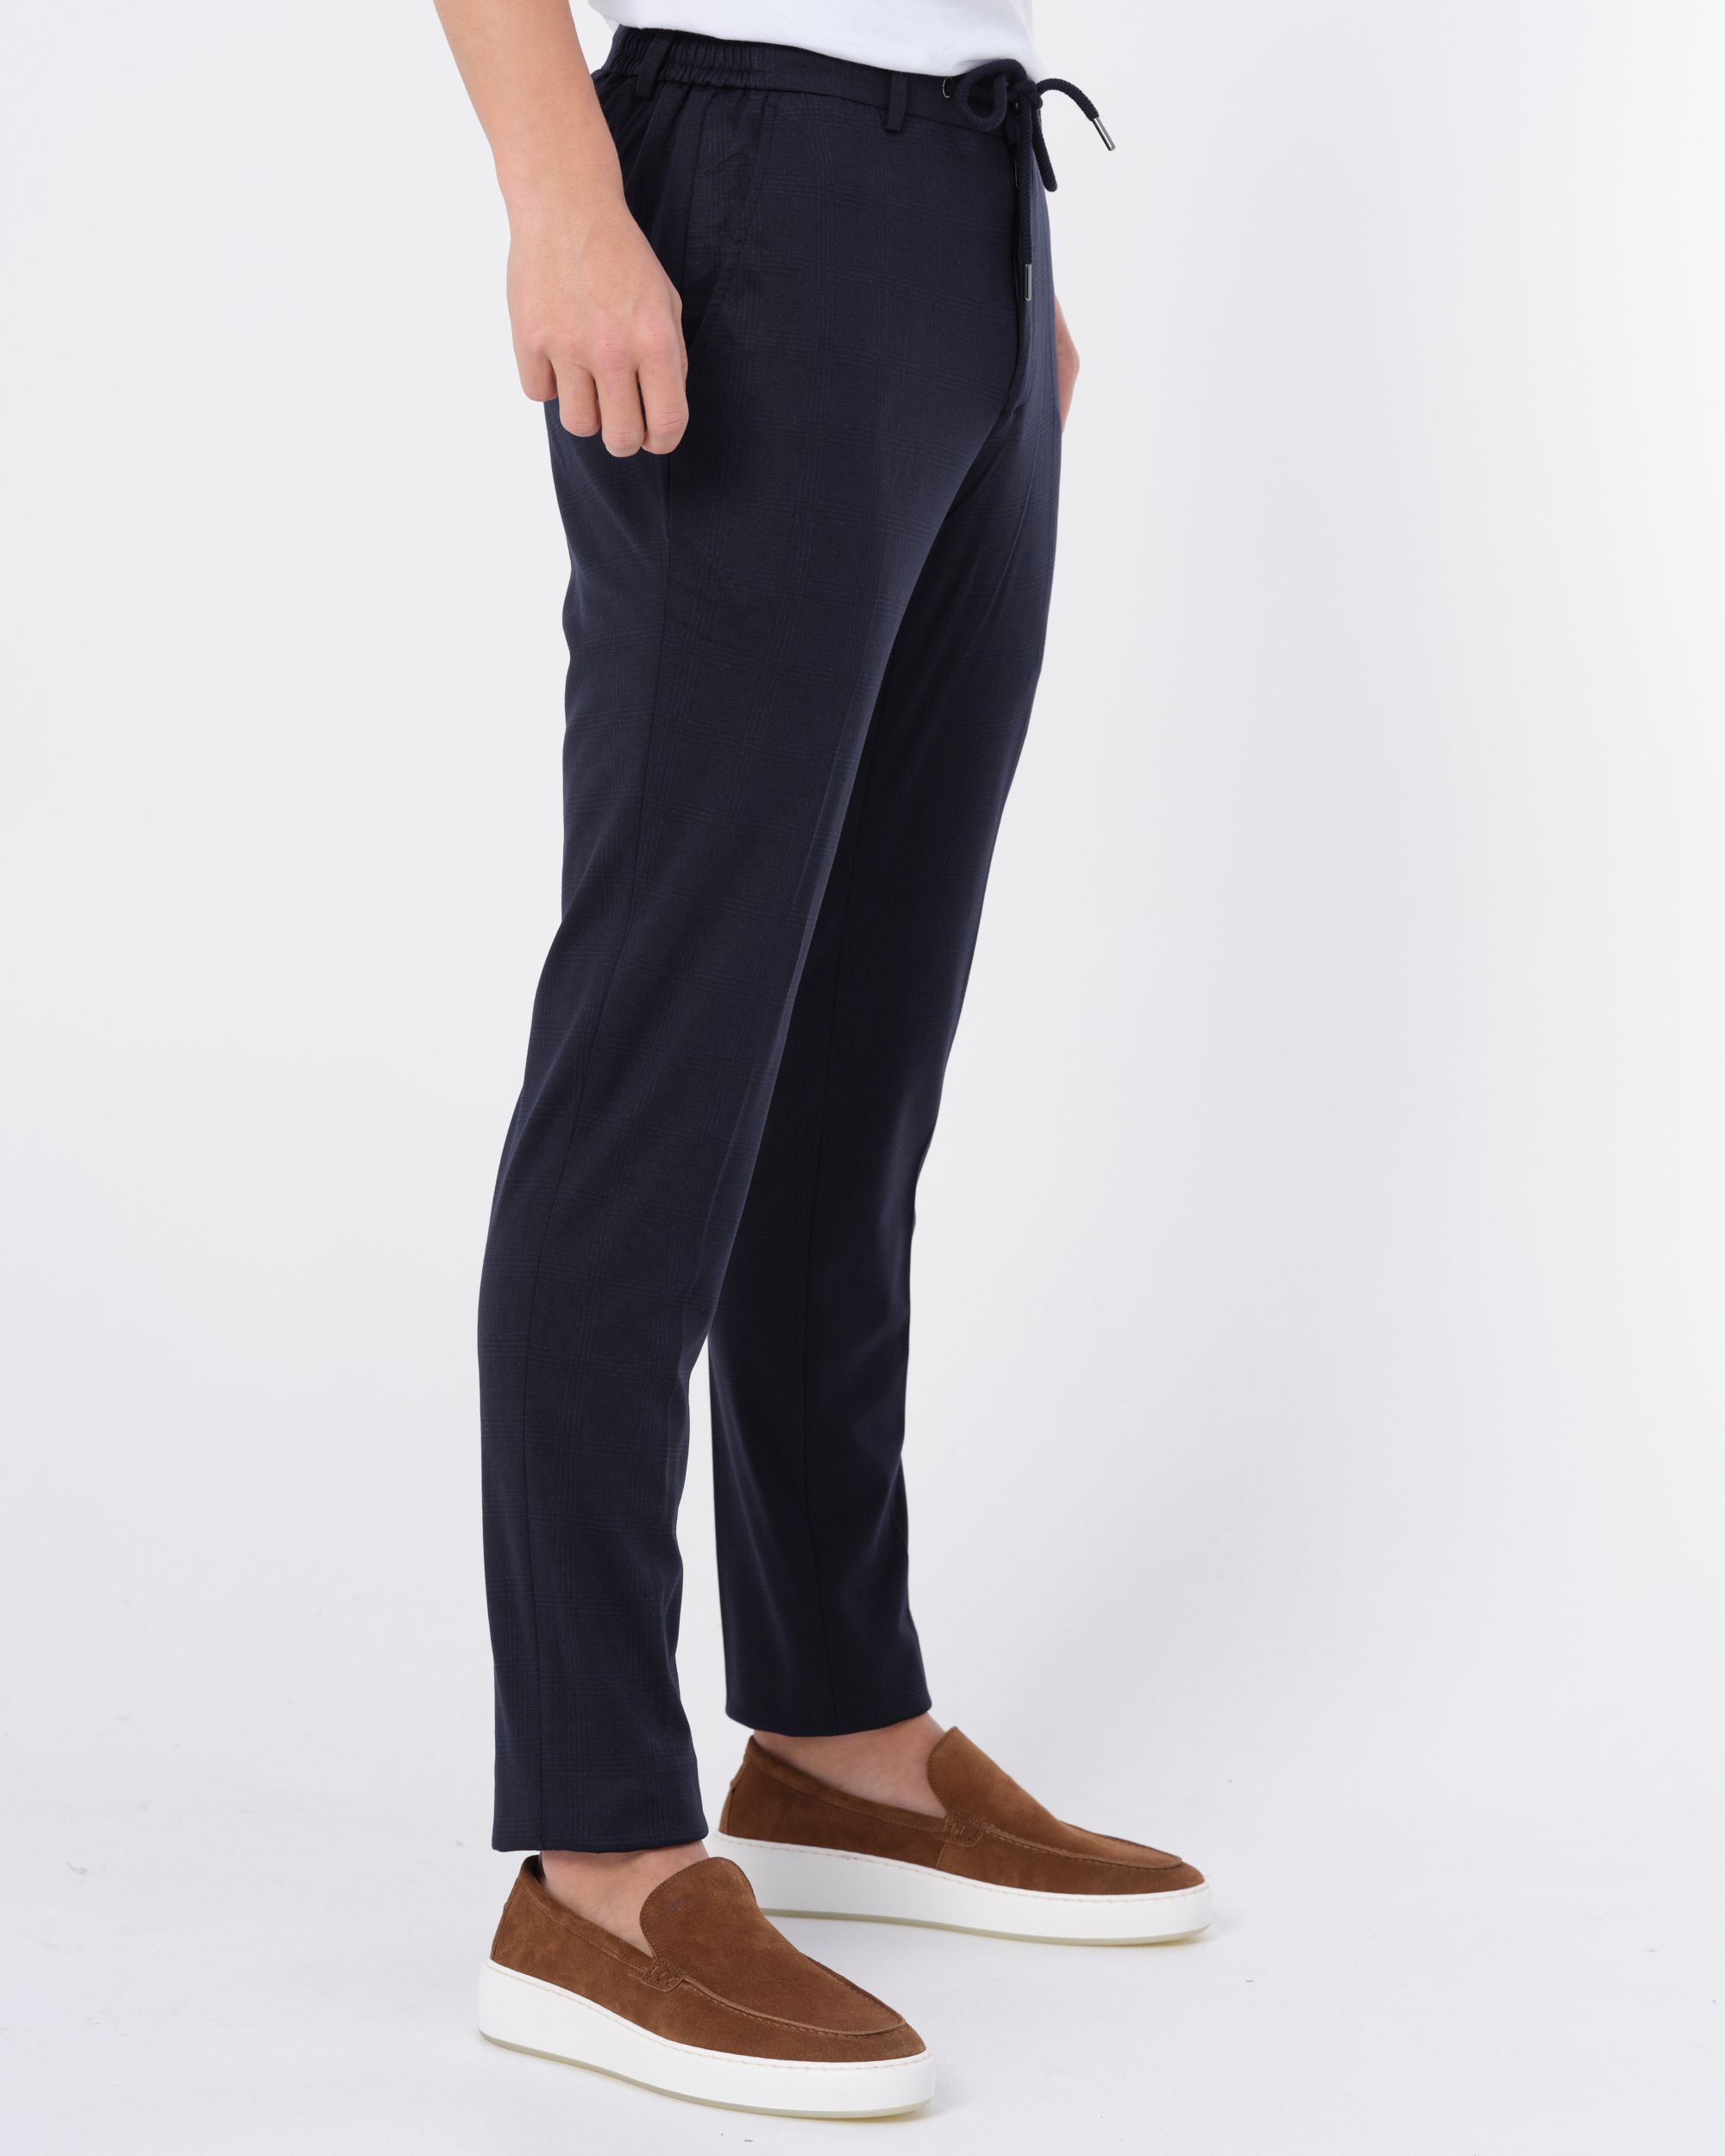 The BLUEPRINT Premium - Pantalon Donkerblauw uni 084021-001-46